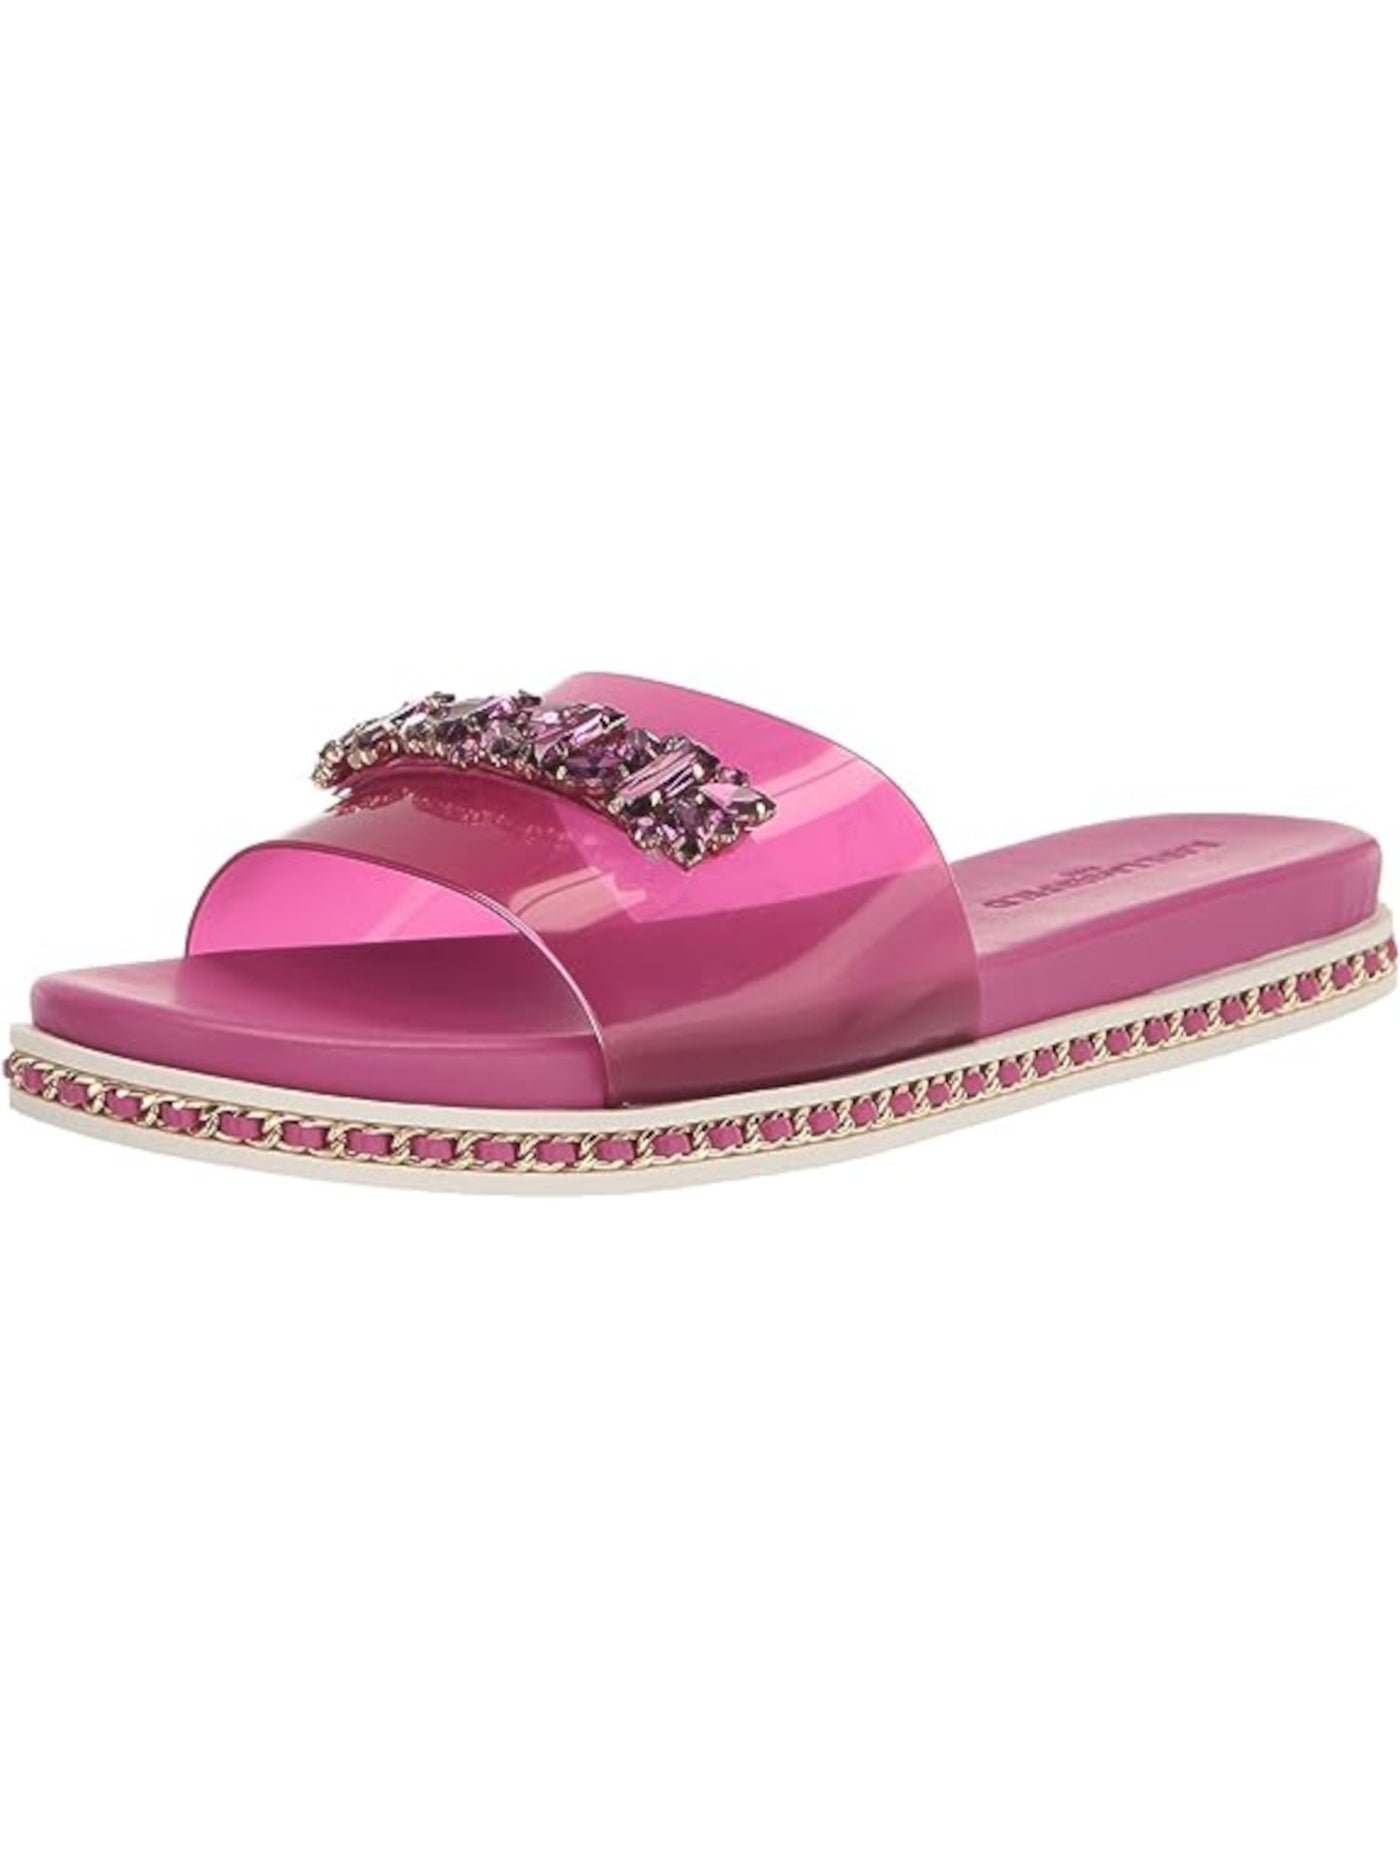 KARL LAGERFELD PARIS Womens Pink Embellished Comfort Bijou Round Toe Platform Slip On Sandals 6.5 M